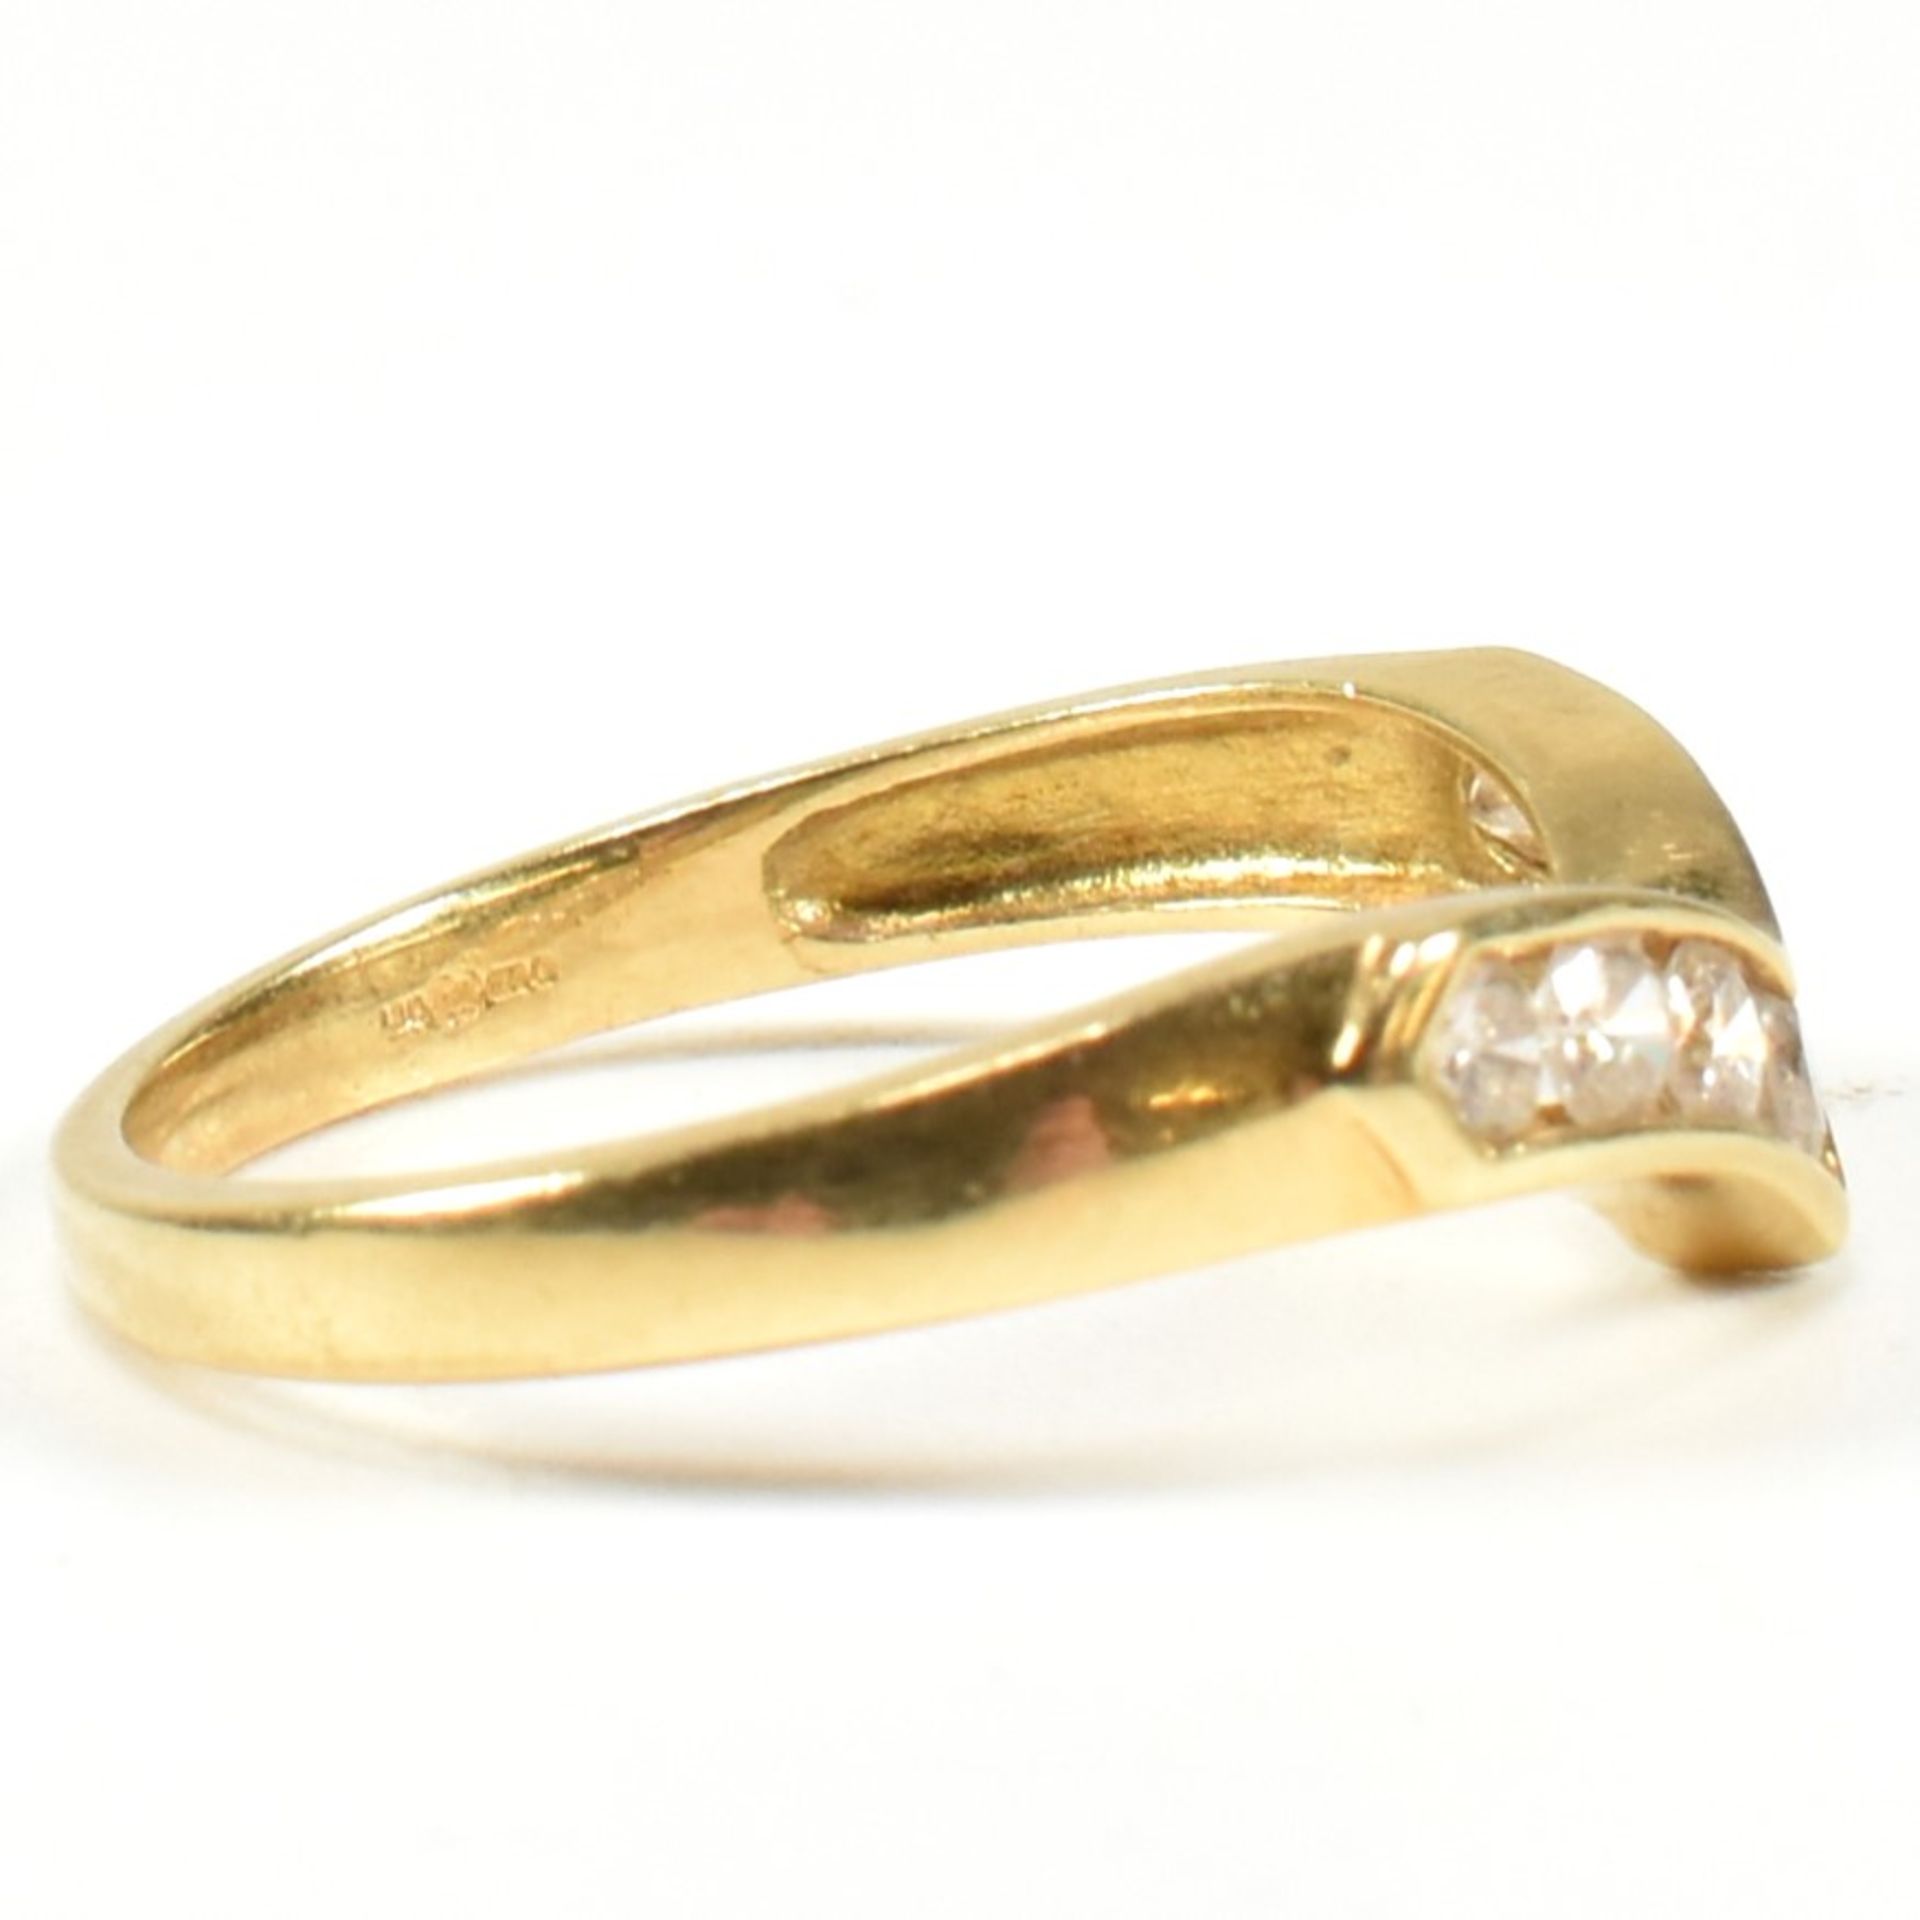 HALLMARKED 18CT GOLD & DIAMOND WISHBONE RING - Image 5 of 9